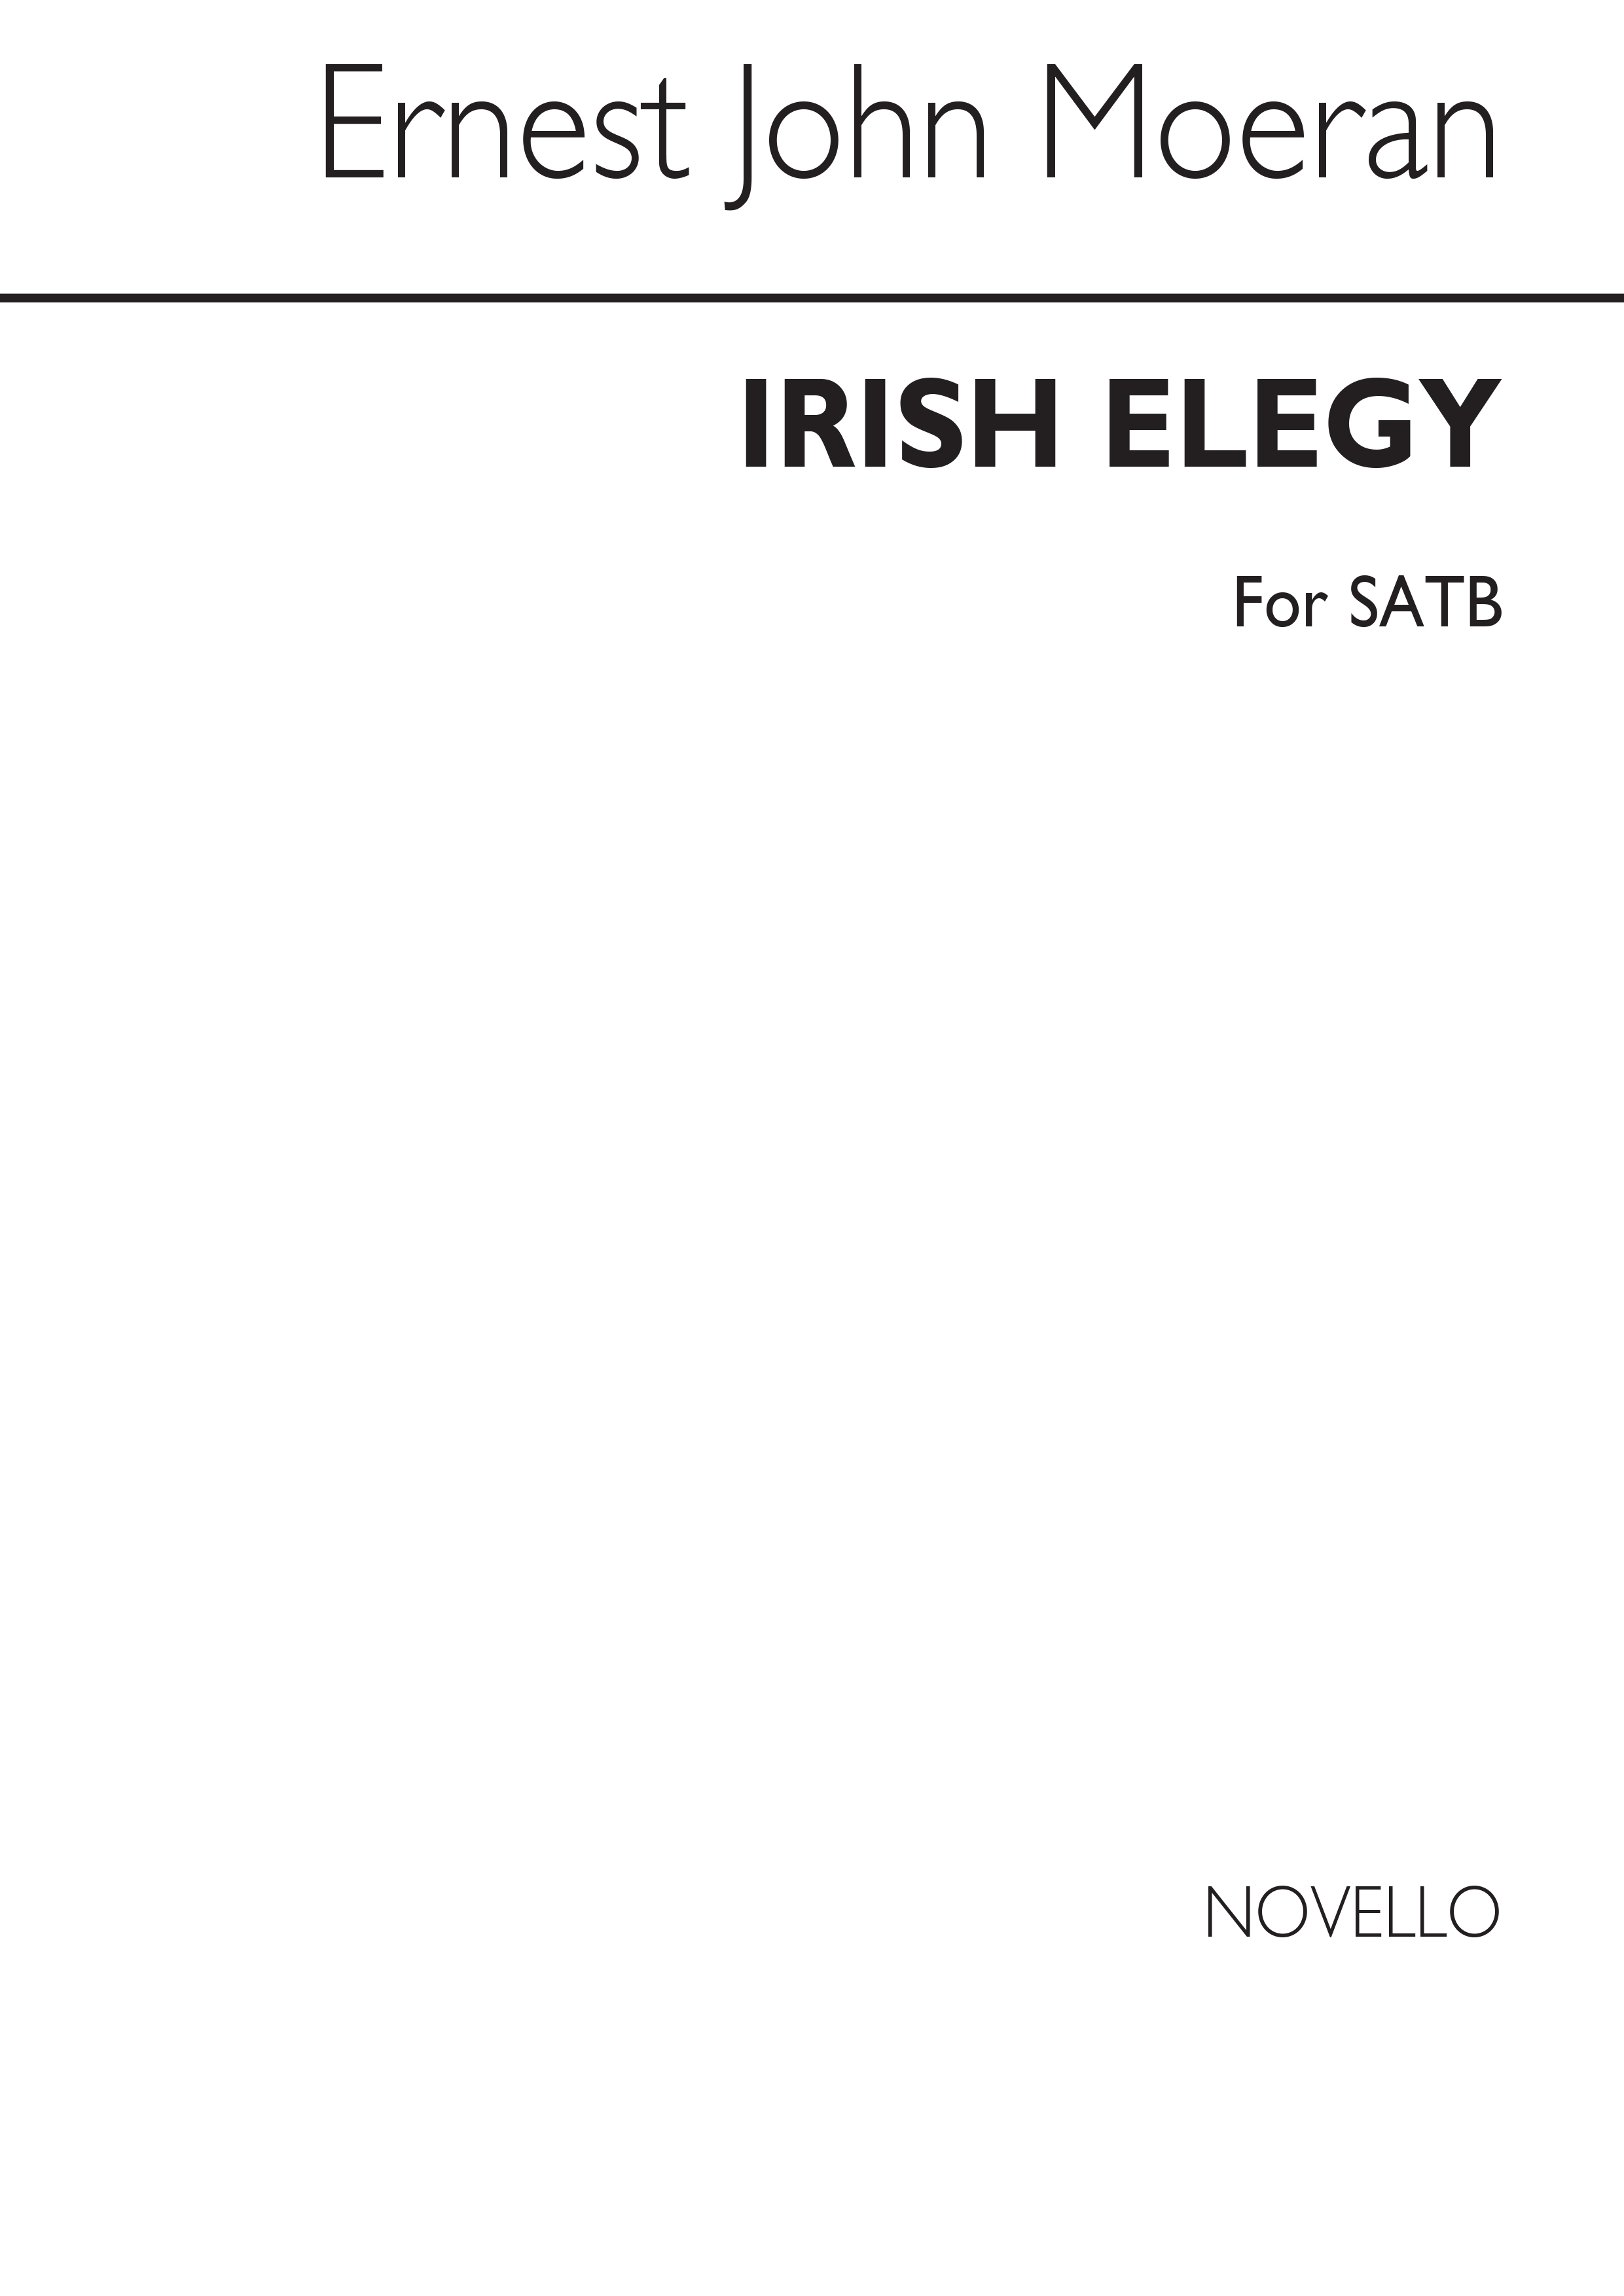 Moeran: Irish Elegy for SATB Chorus